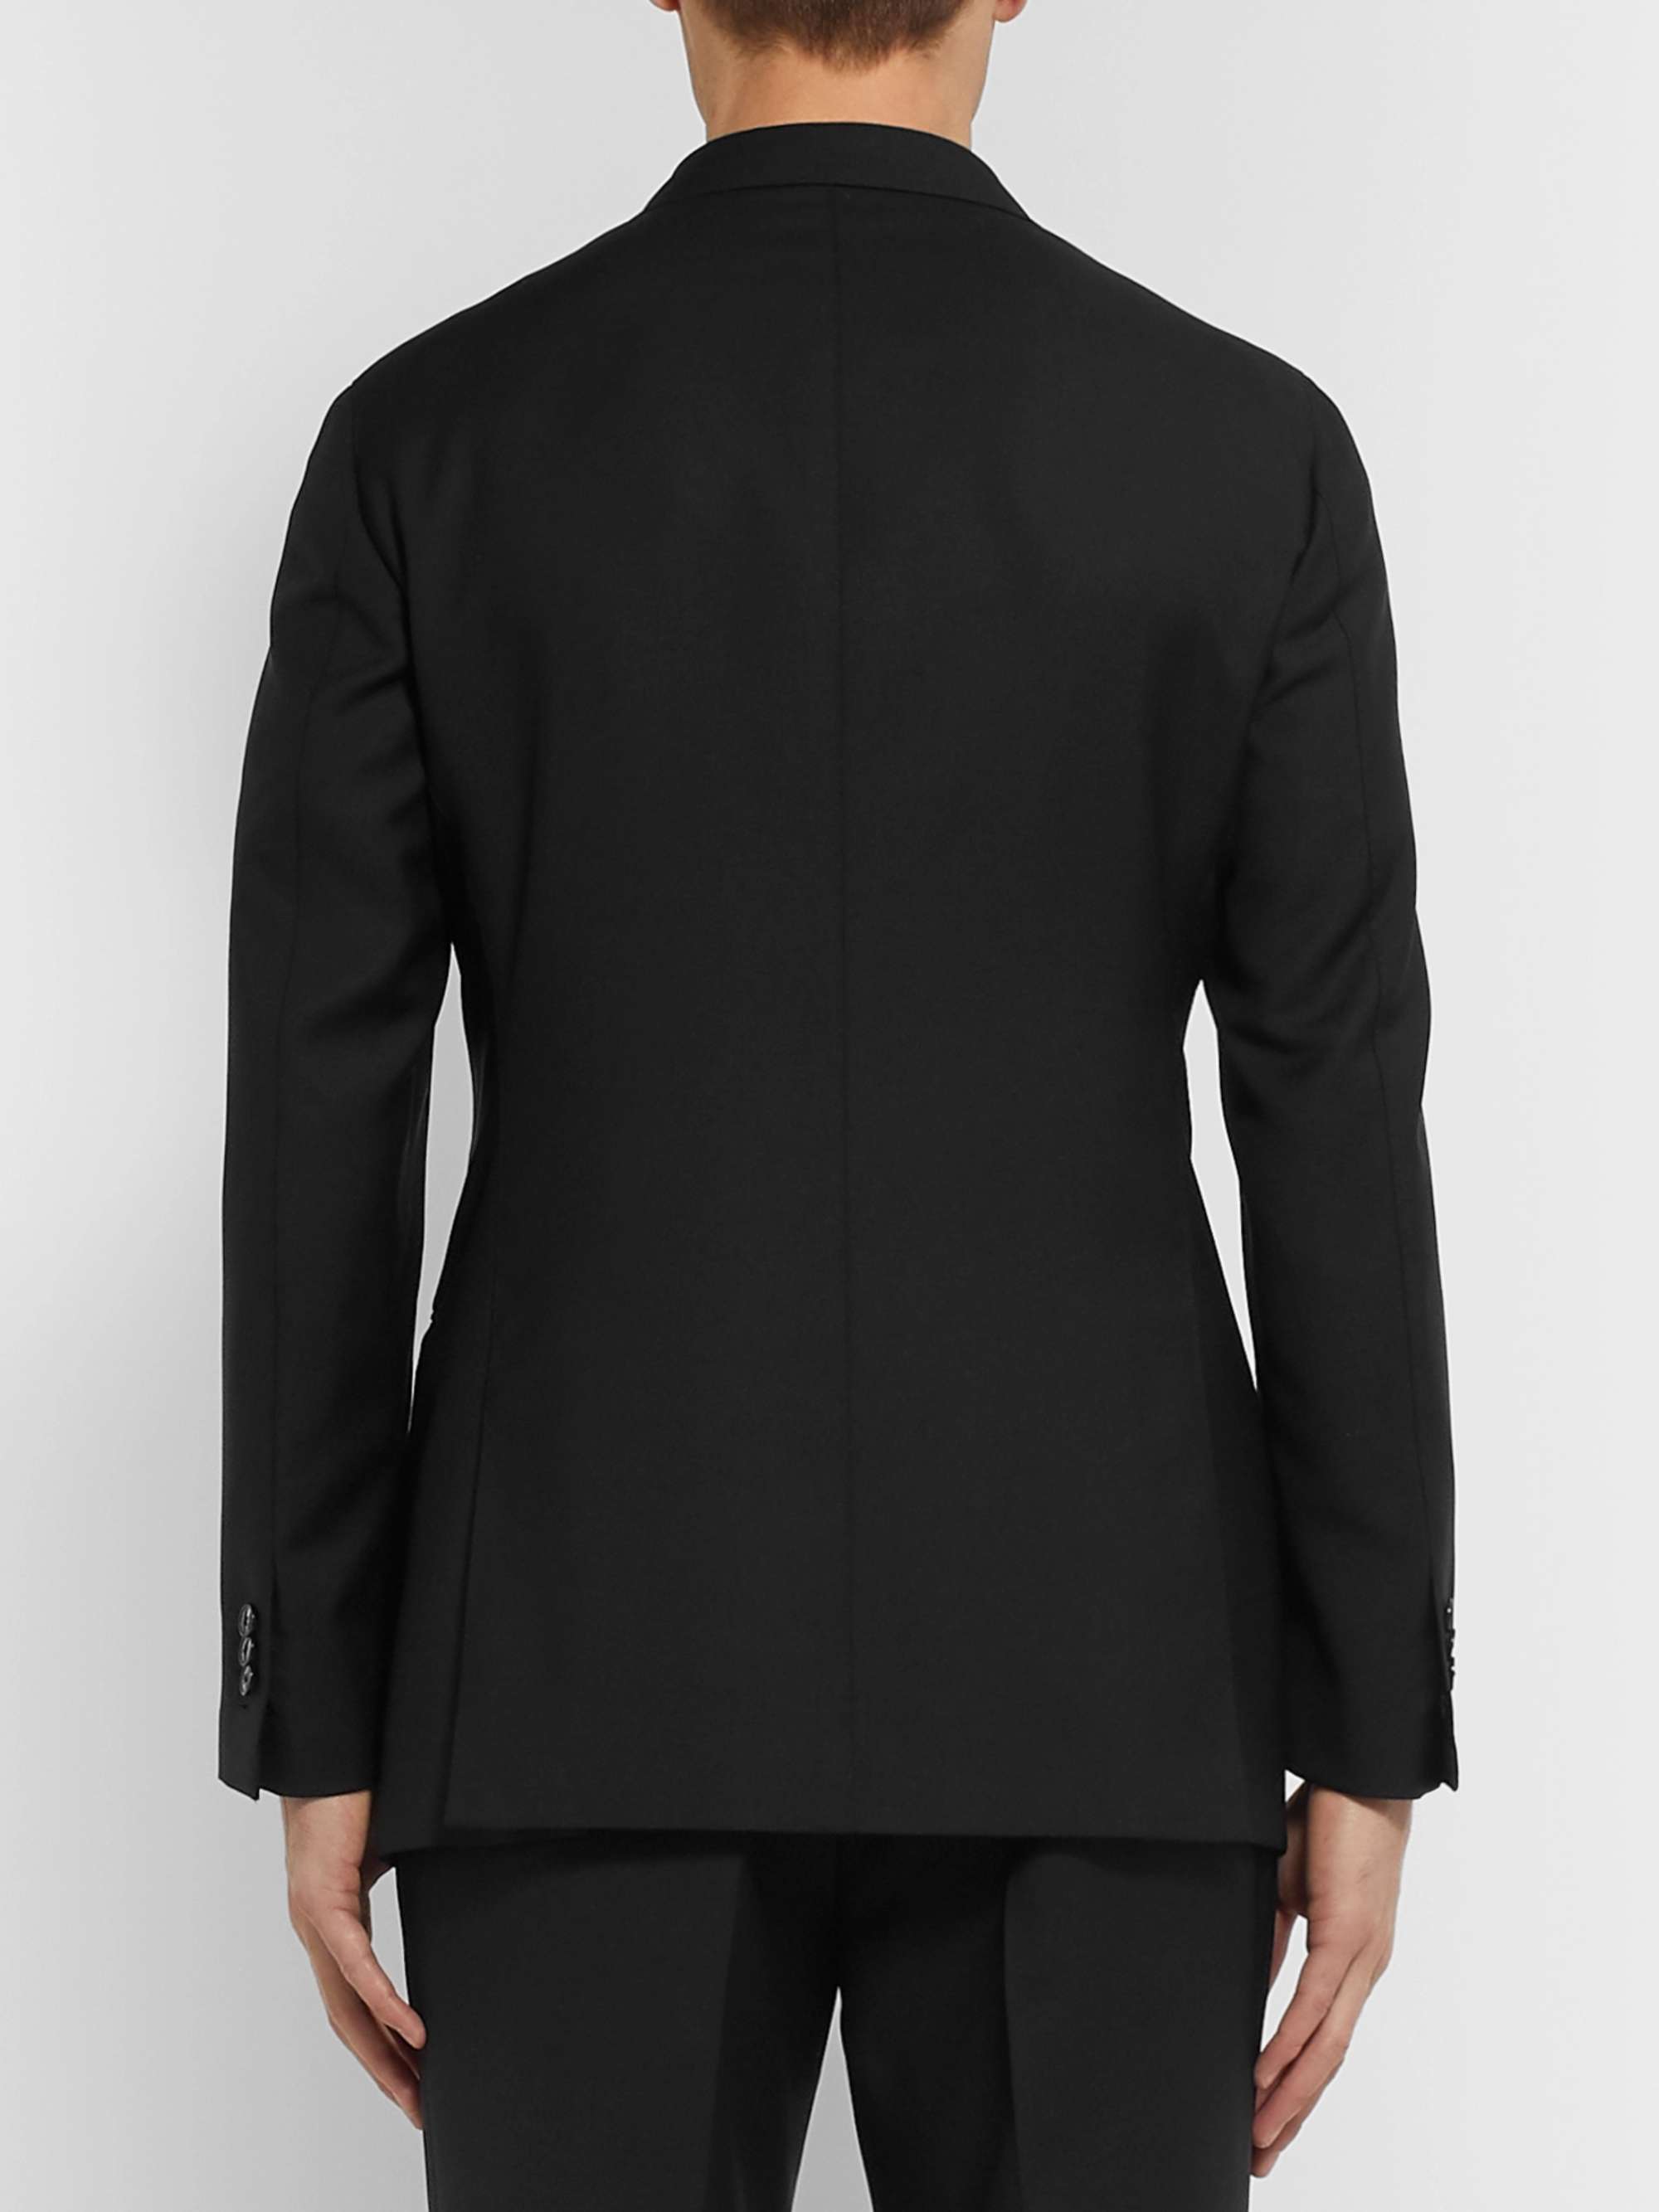 SAMAN AMEL Black Wool and Mohair-Blend Tuxedo Jacket